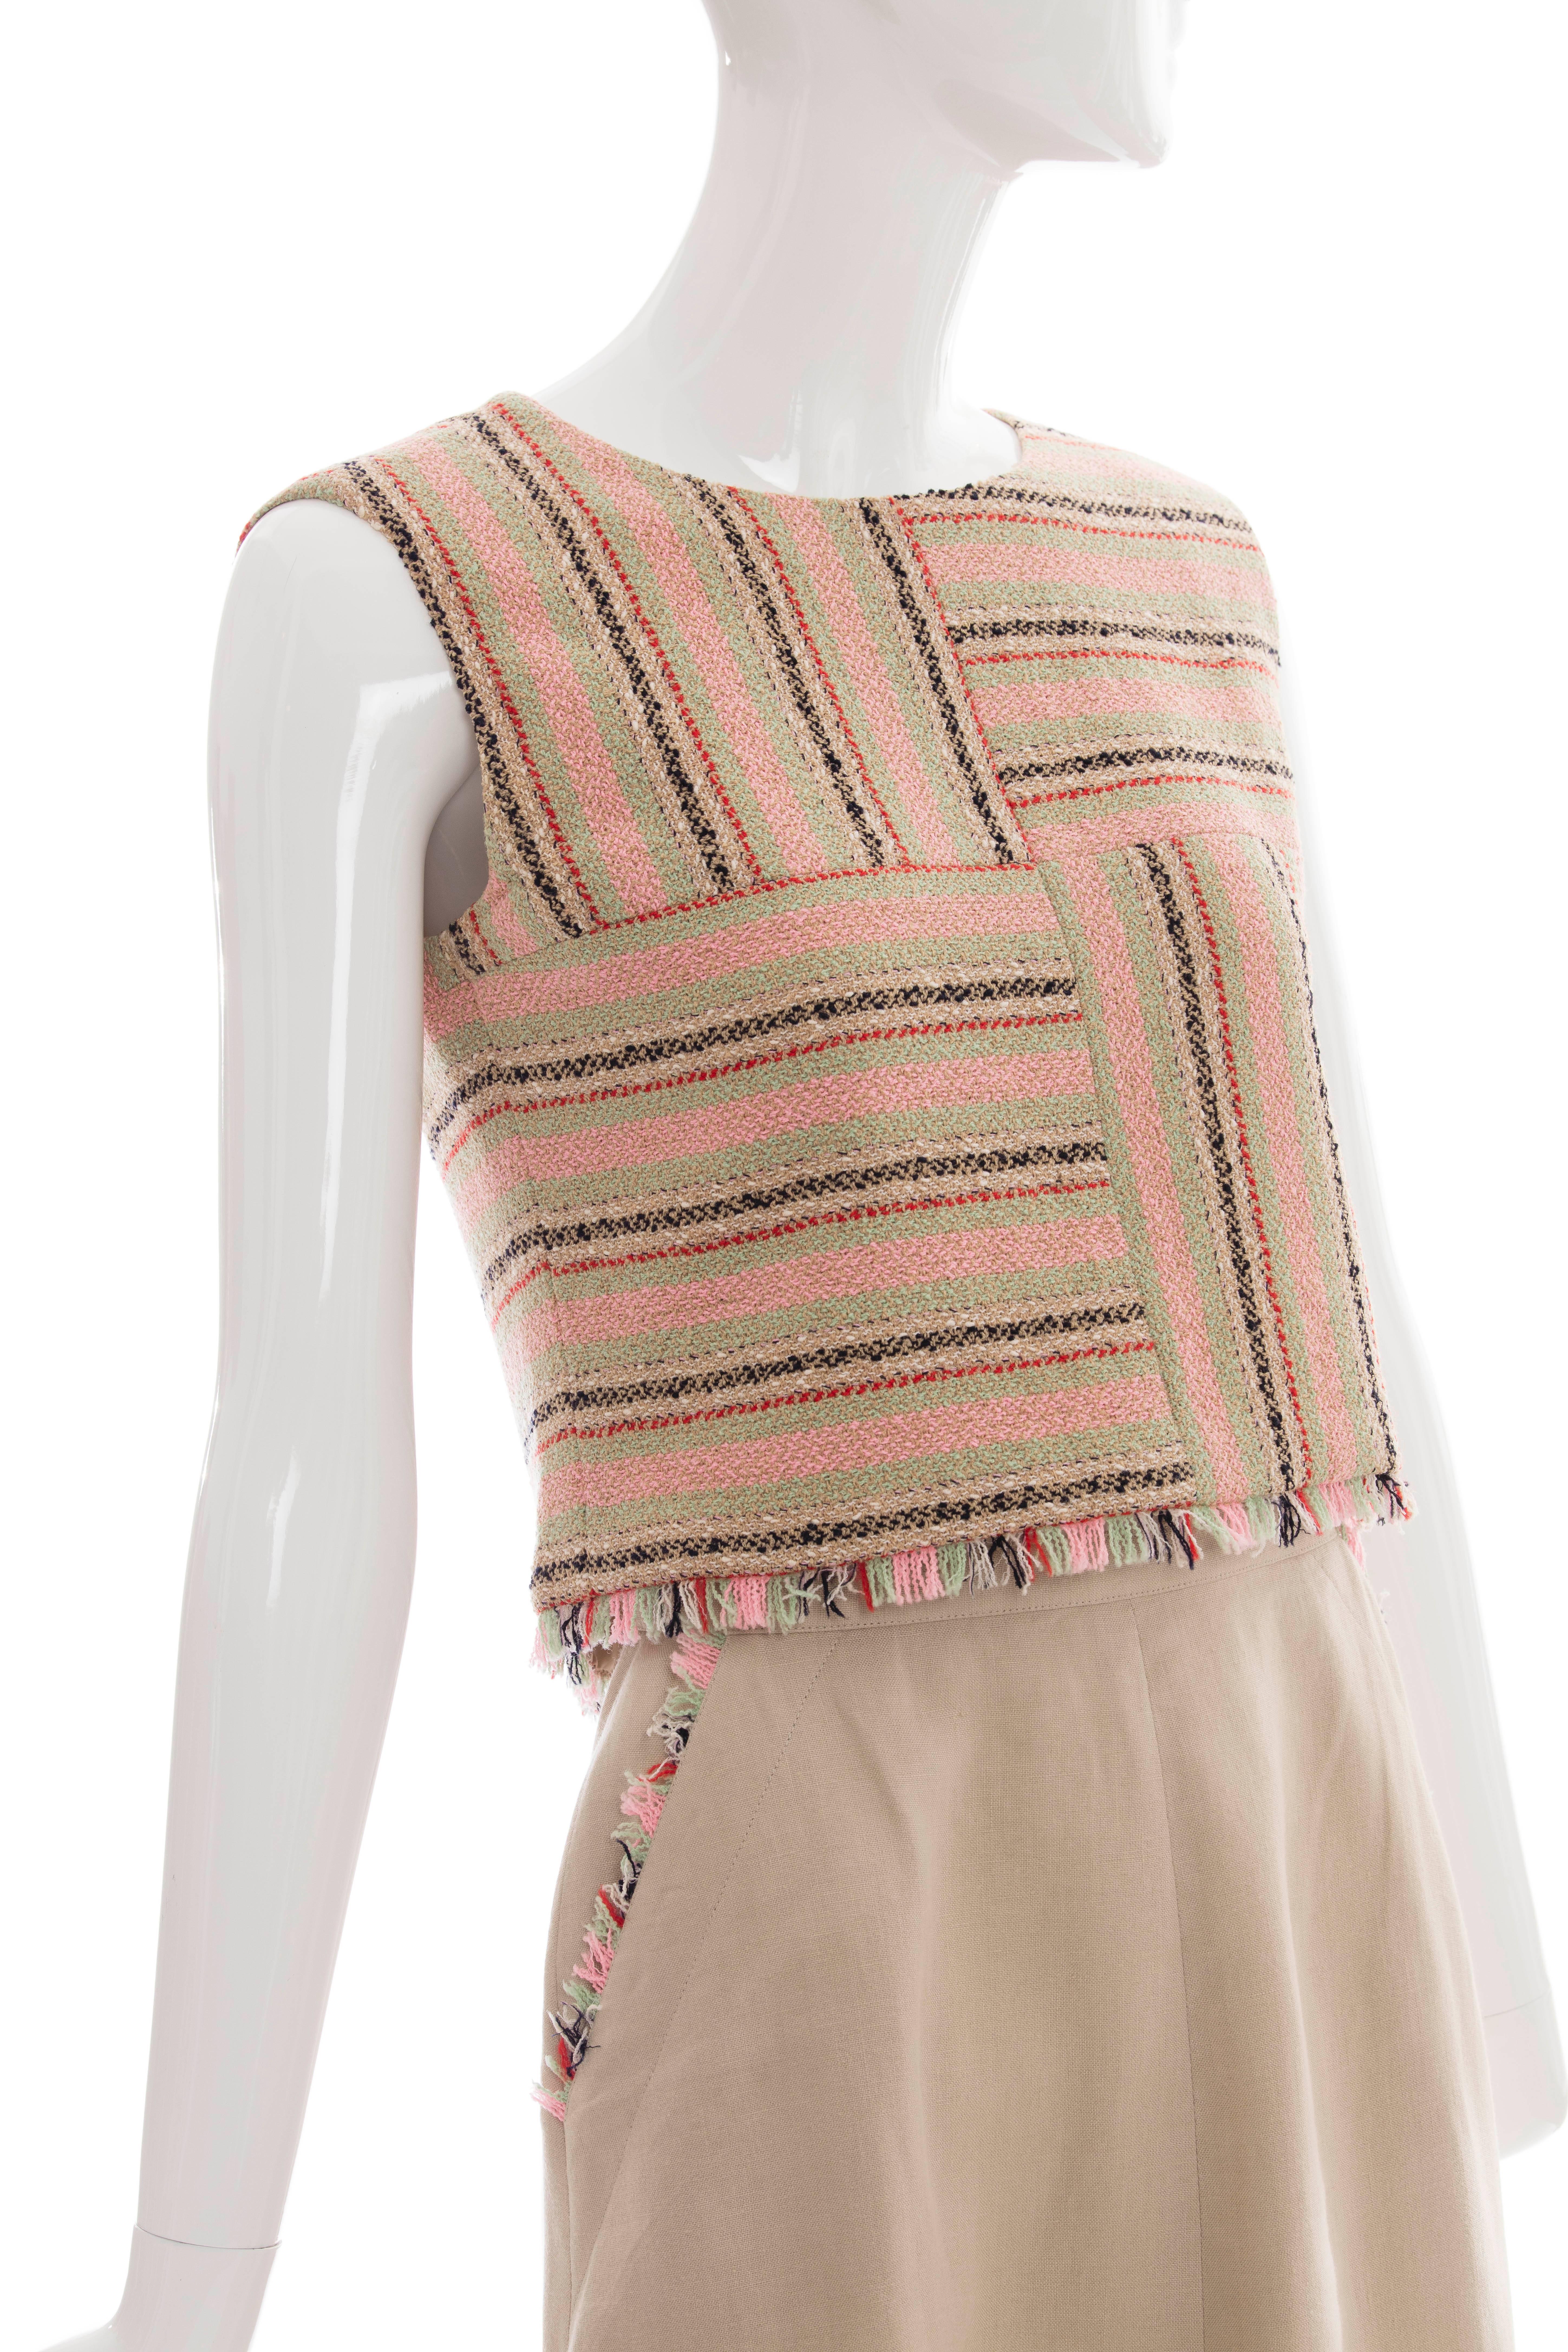 Chanel Three Piece Linen Skirt Suit, Resort 2000 For Sale 3